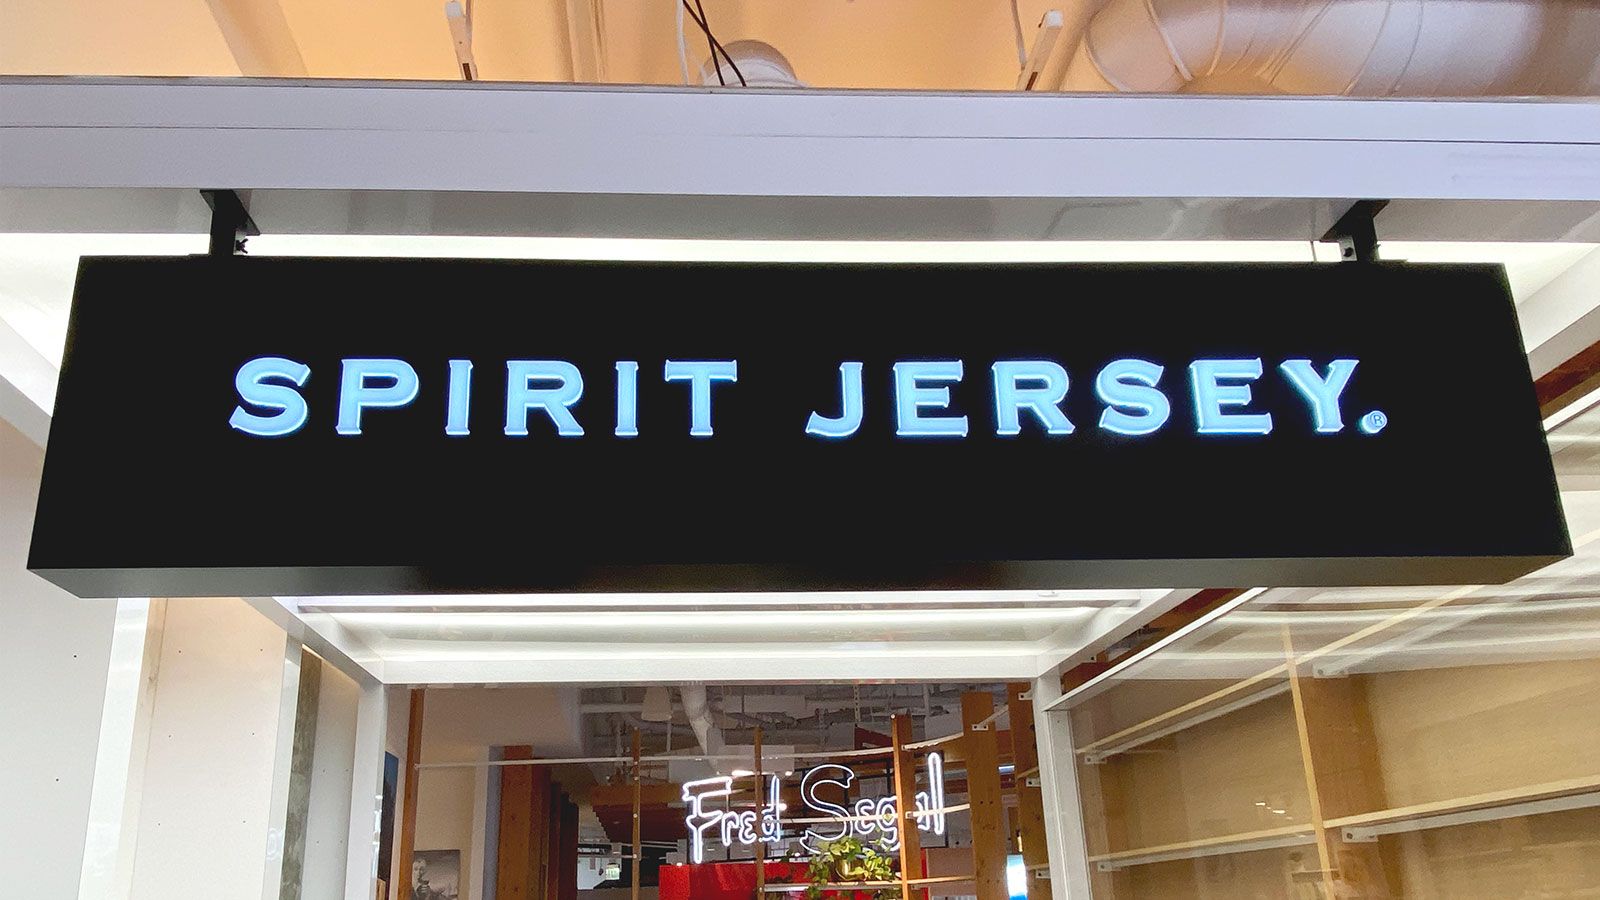 Spirit Jersey push through sign